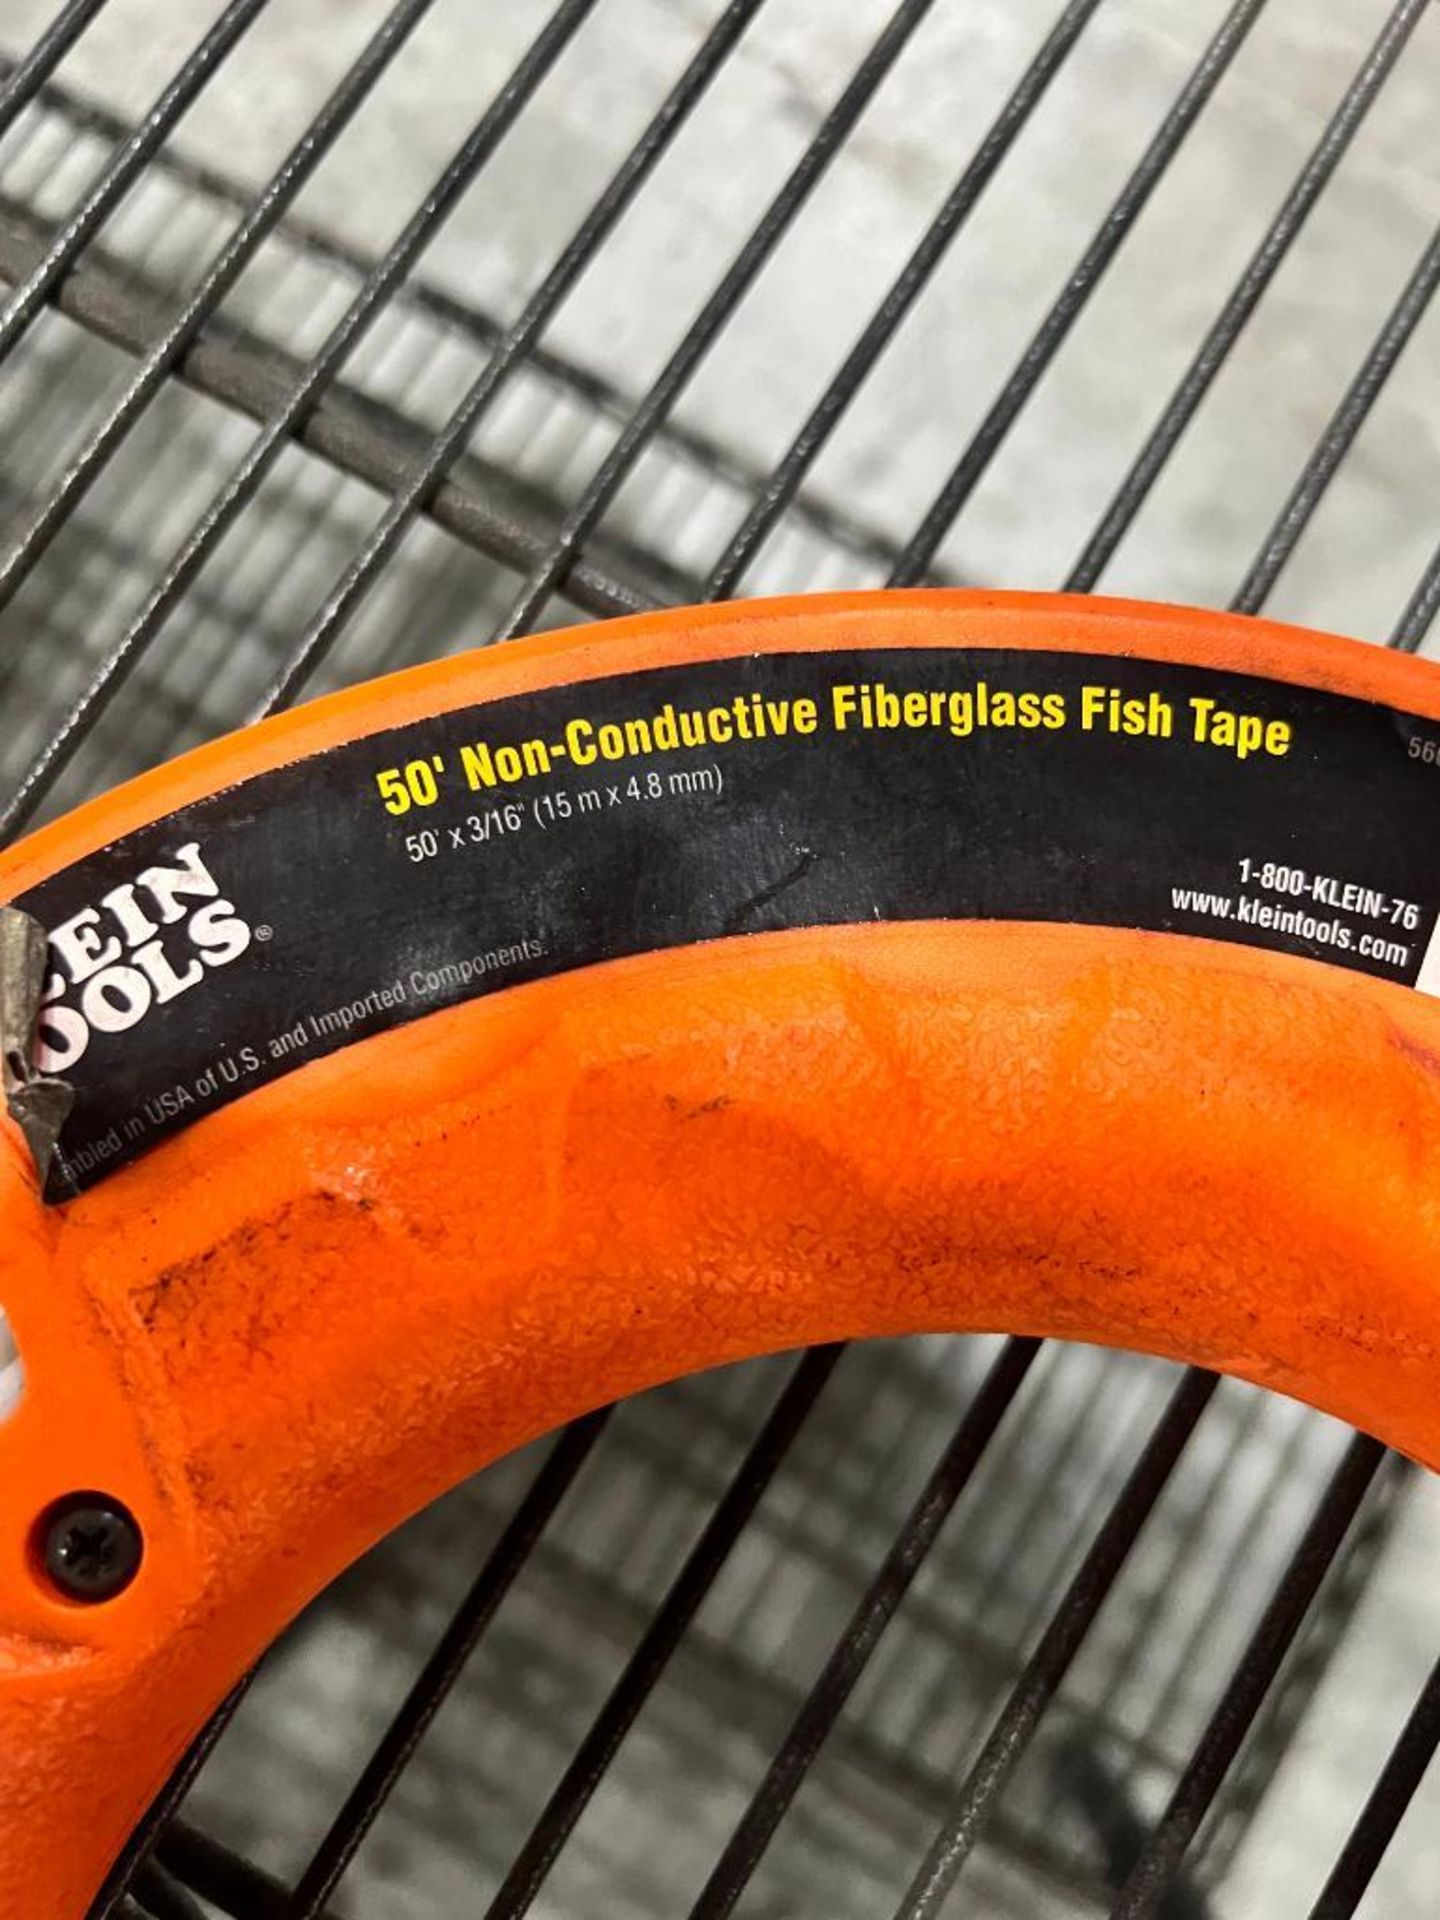 Klein 50' Nonconductive Fiberglass Fish Tape - Image 2 of 2